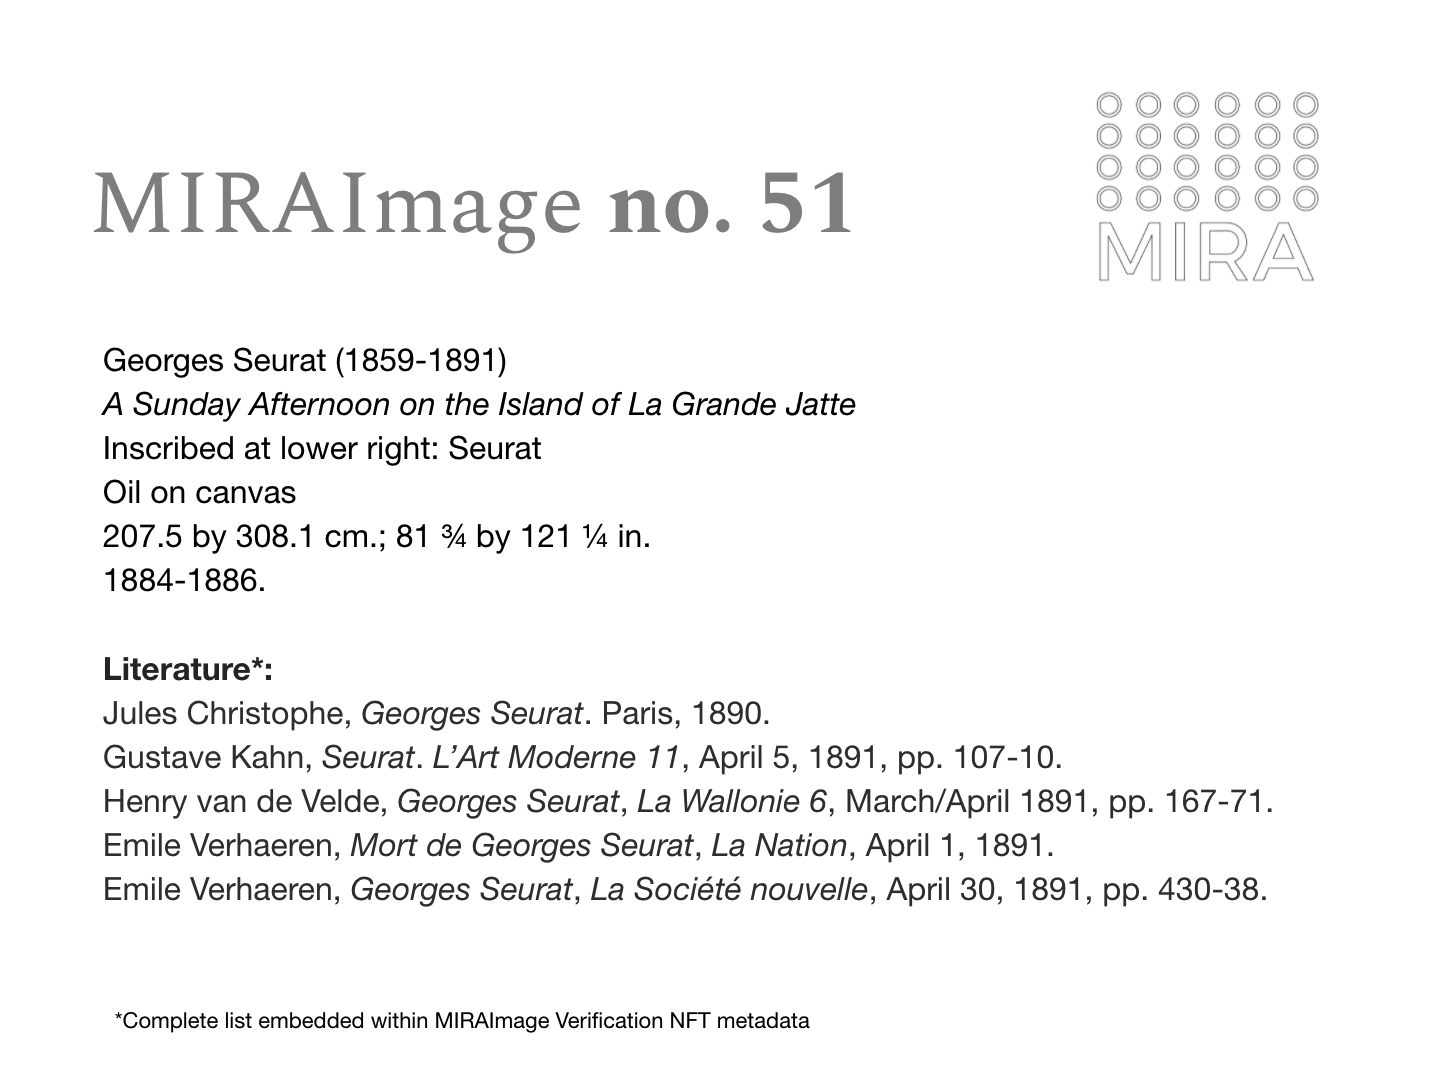 Conceptual image of MIRA Imaging scanning art at